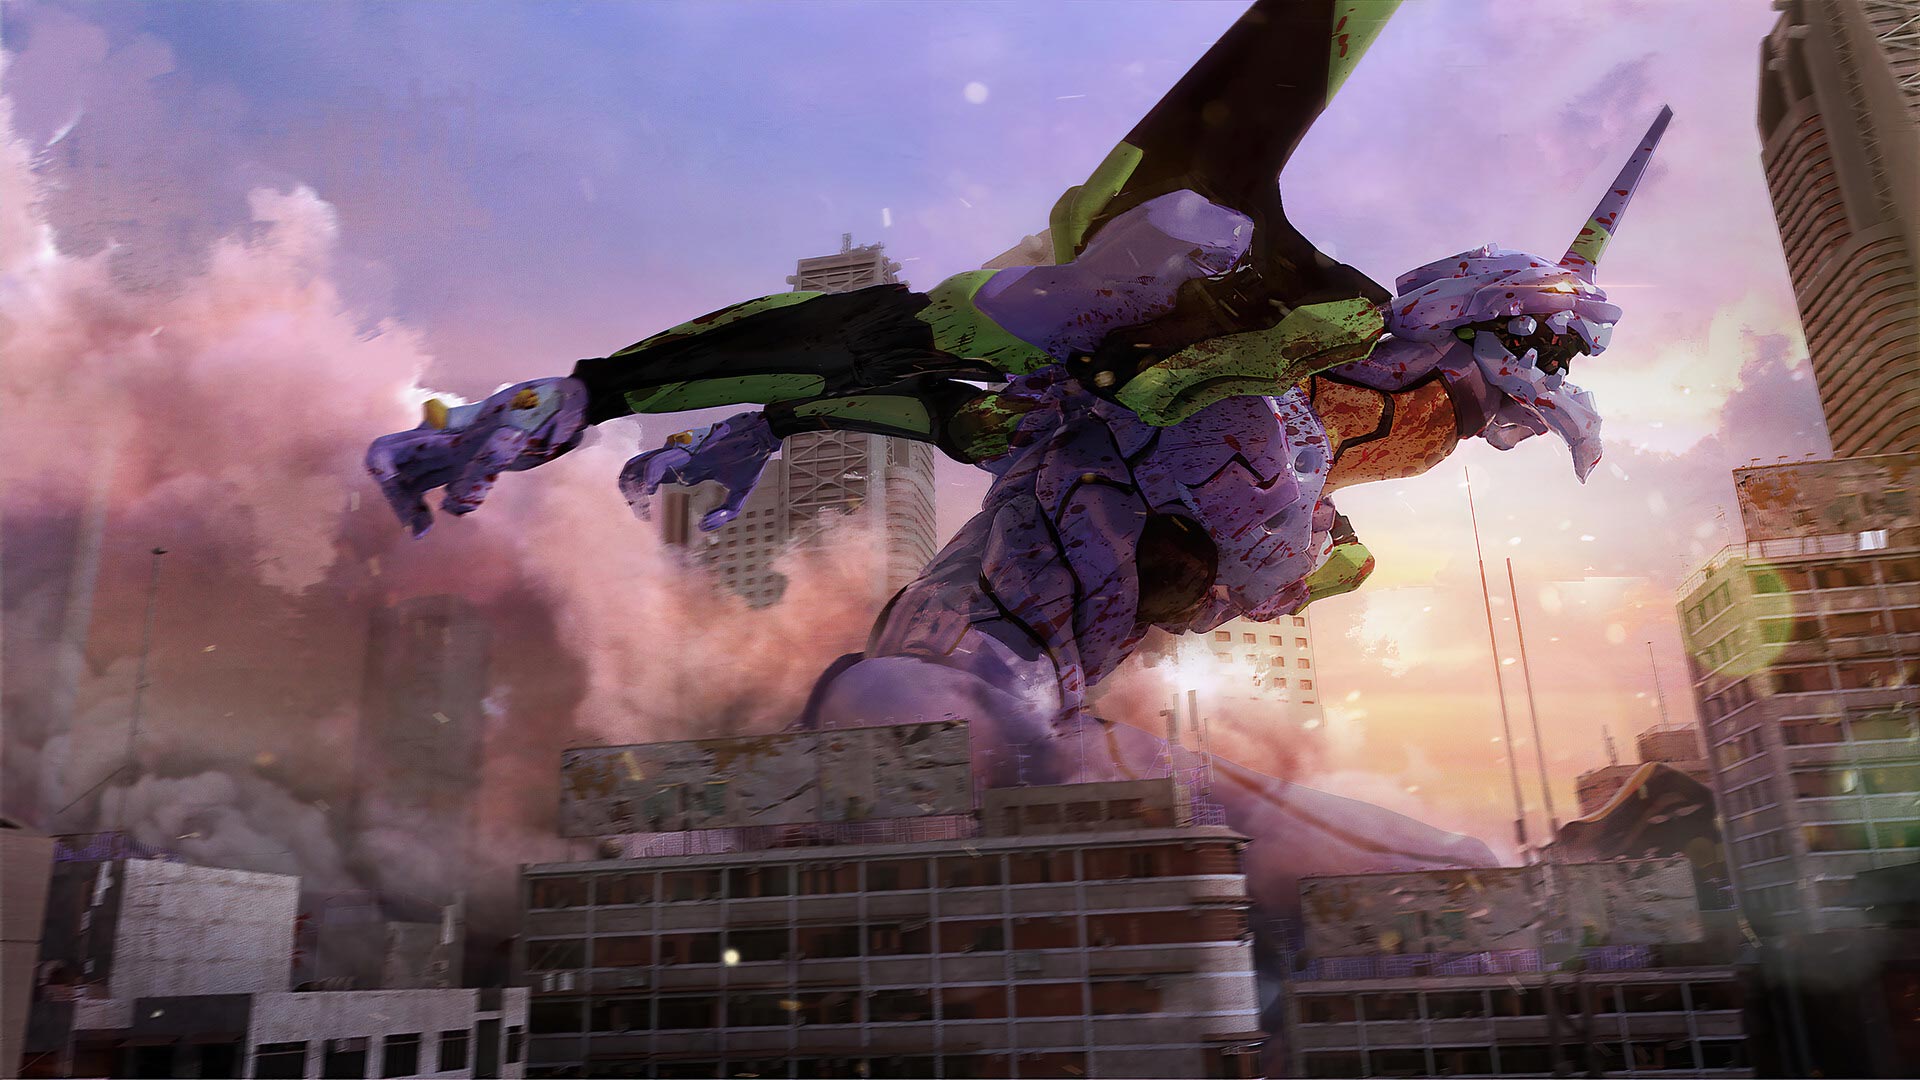 Big robot among the city buildings and pink smoke in Neon Genesis Evangelion anime